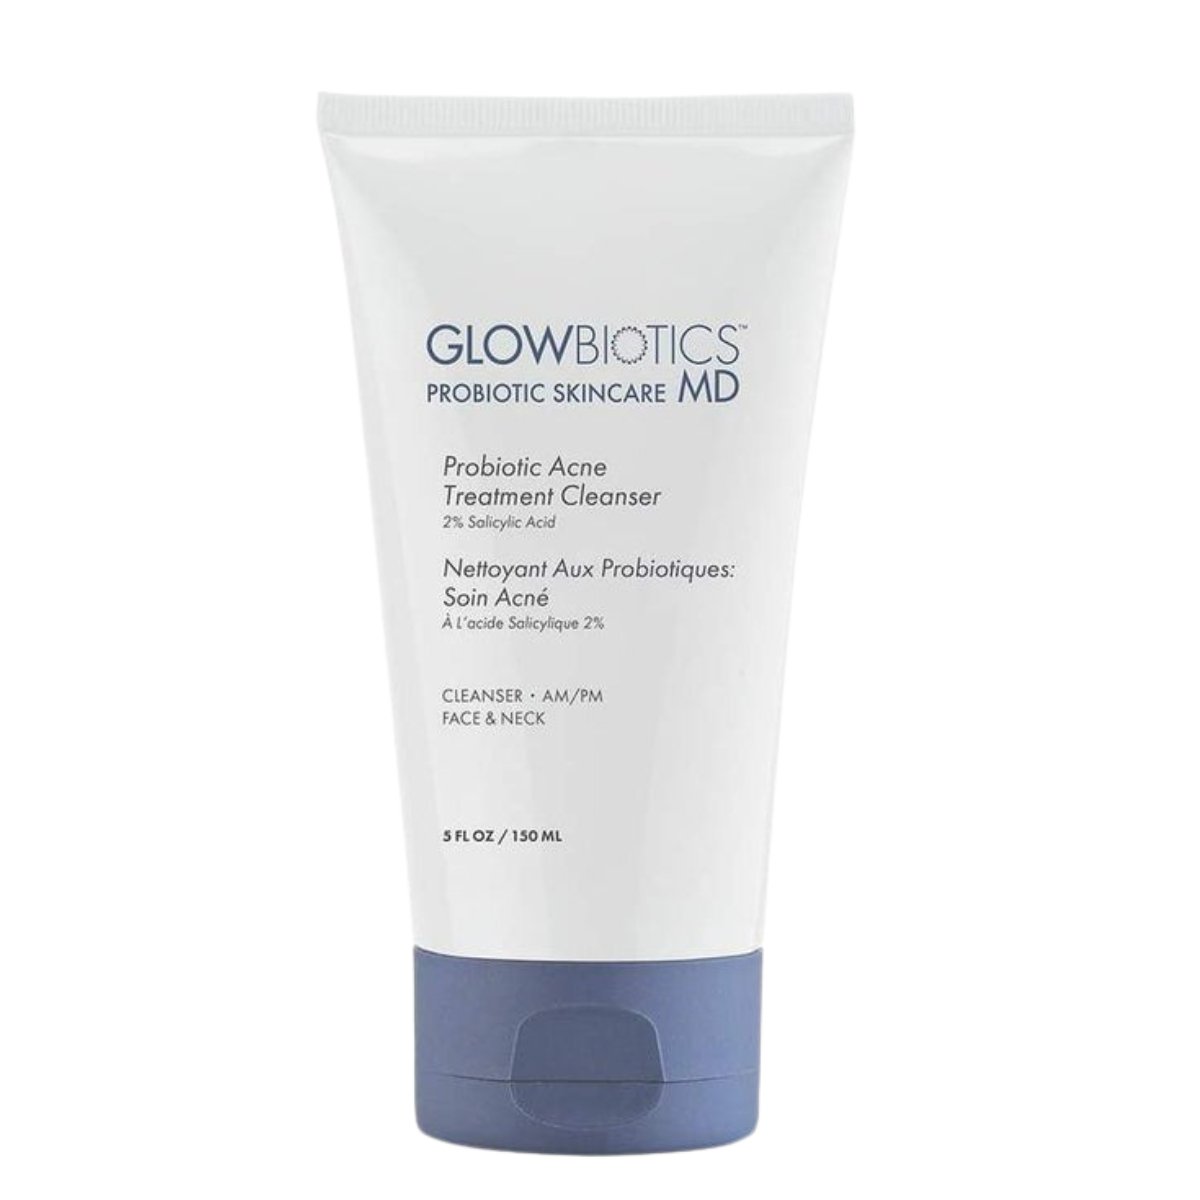 GLOWBIOTICS Probiotic Acne Treatment Cleanser (2% Salicylic Acid)